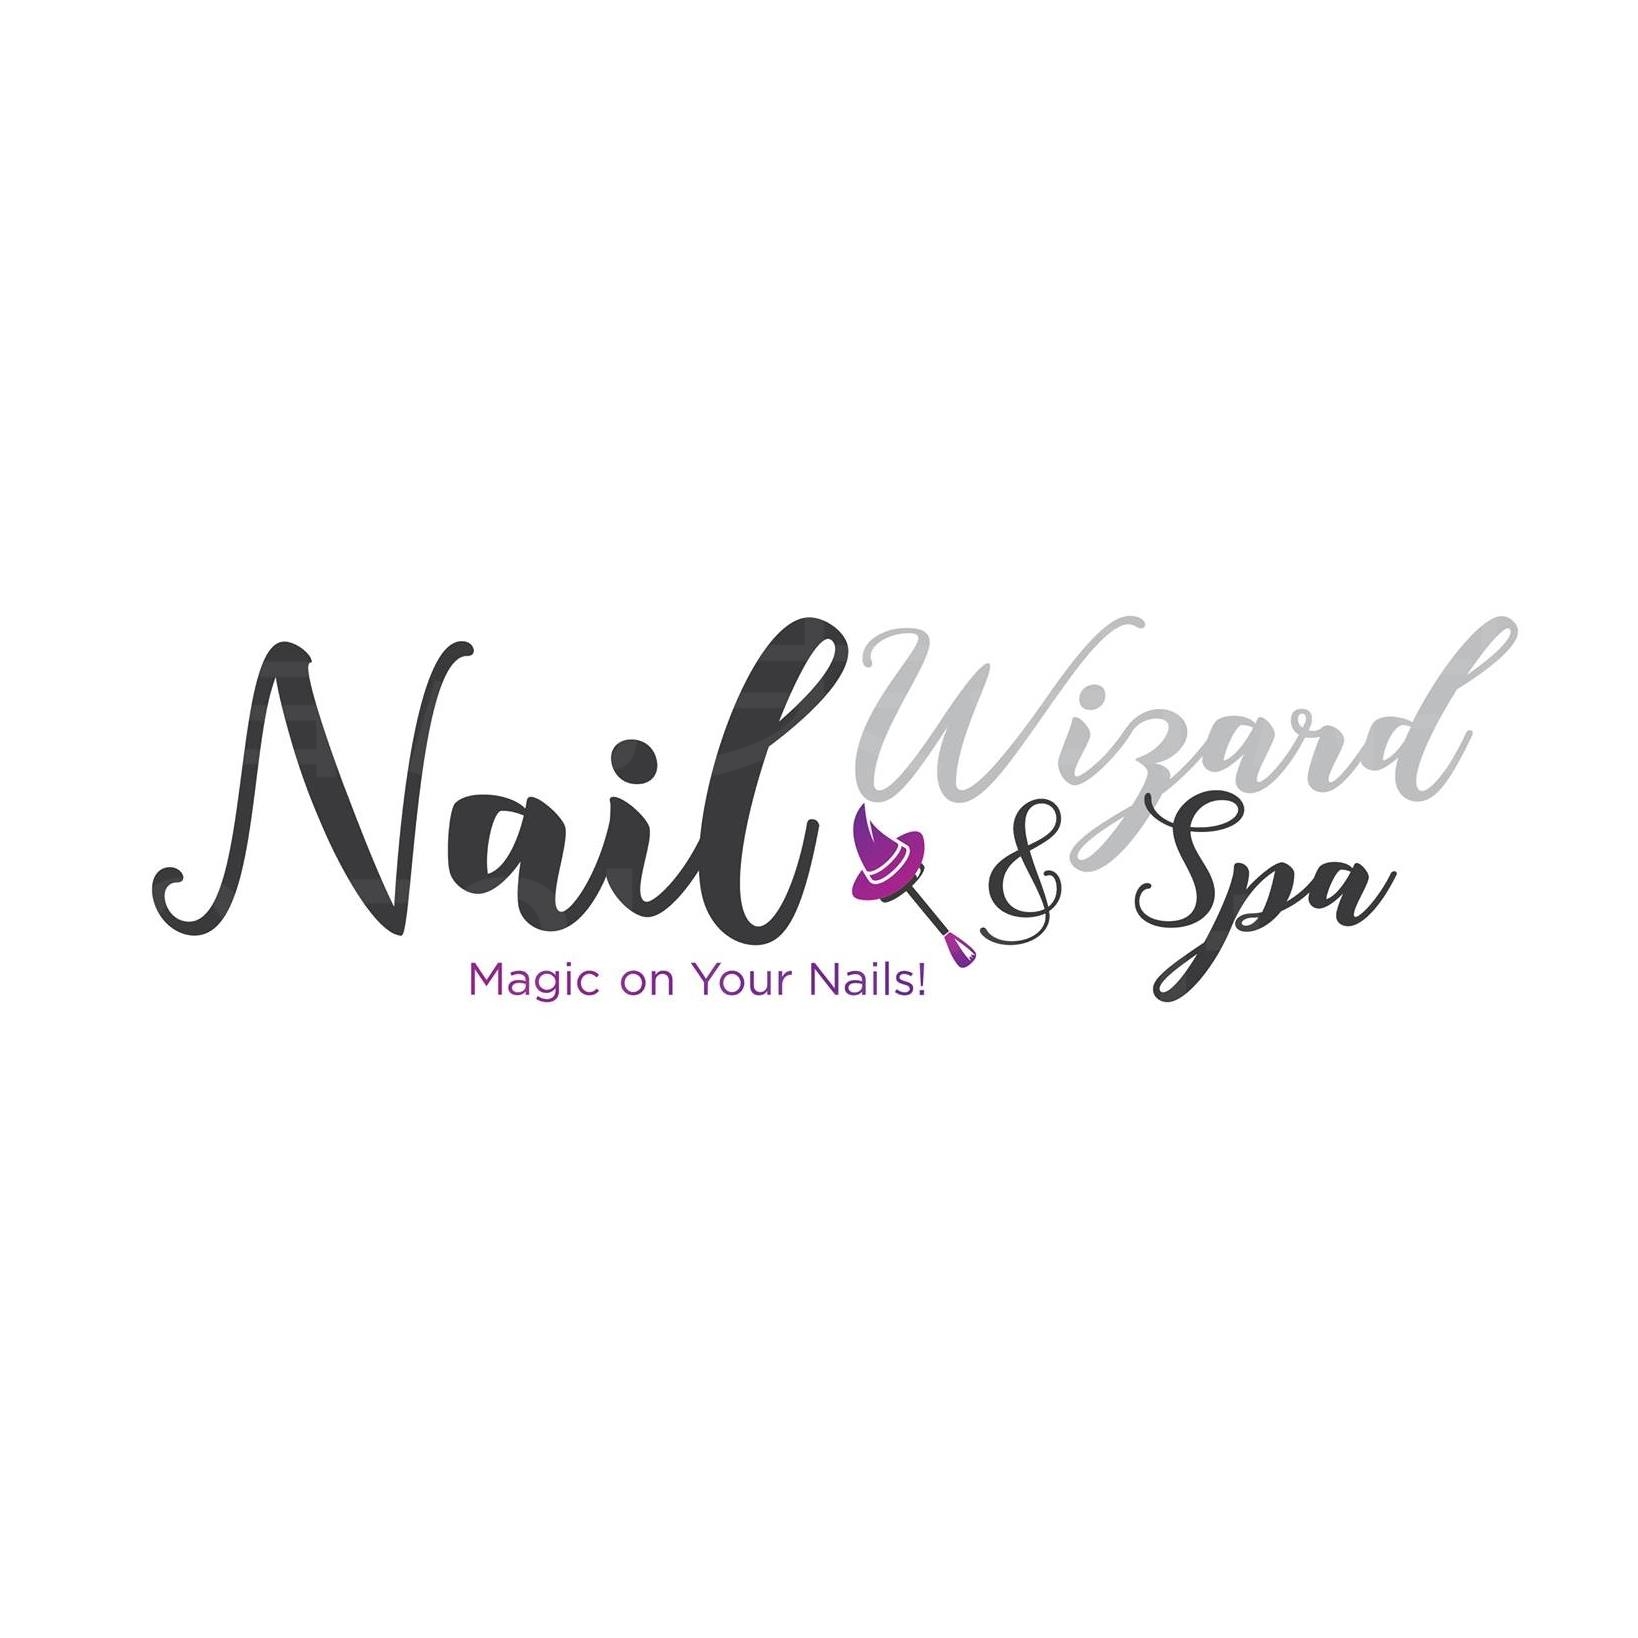 Manicure: Nail Wizard & Spa